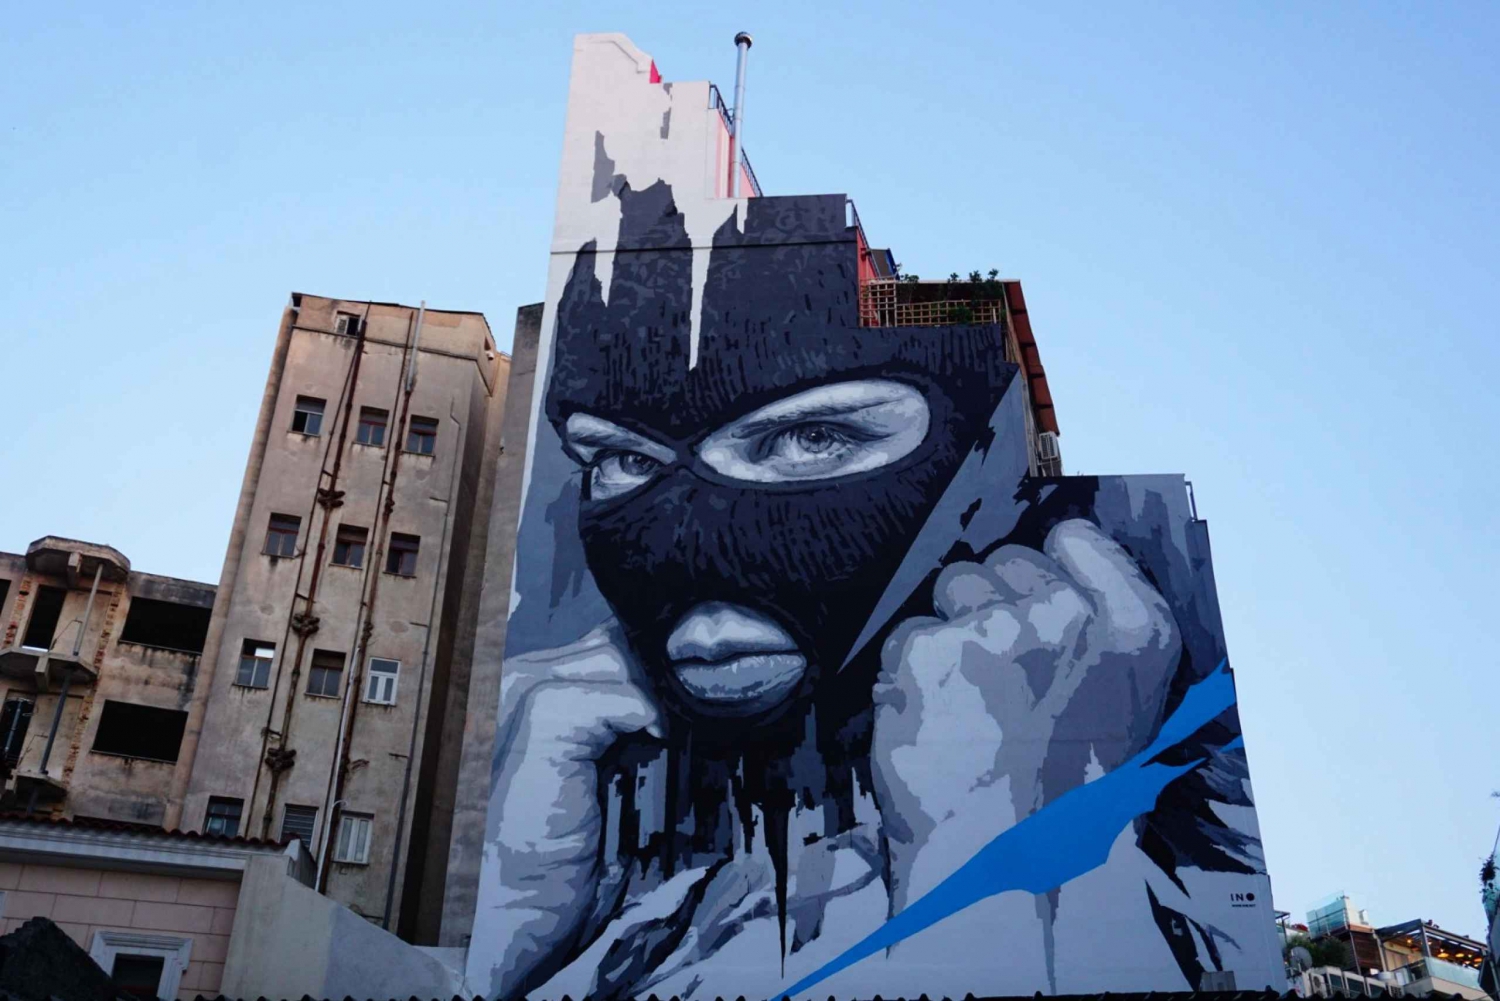 Destaques de Atenas: Arte de rua e comida de rua